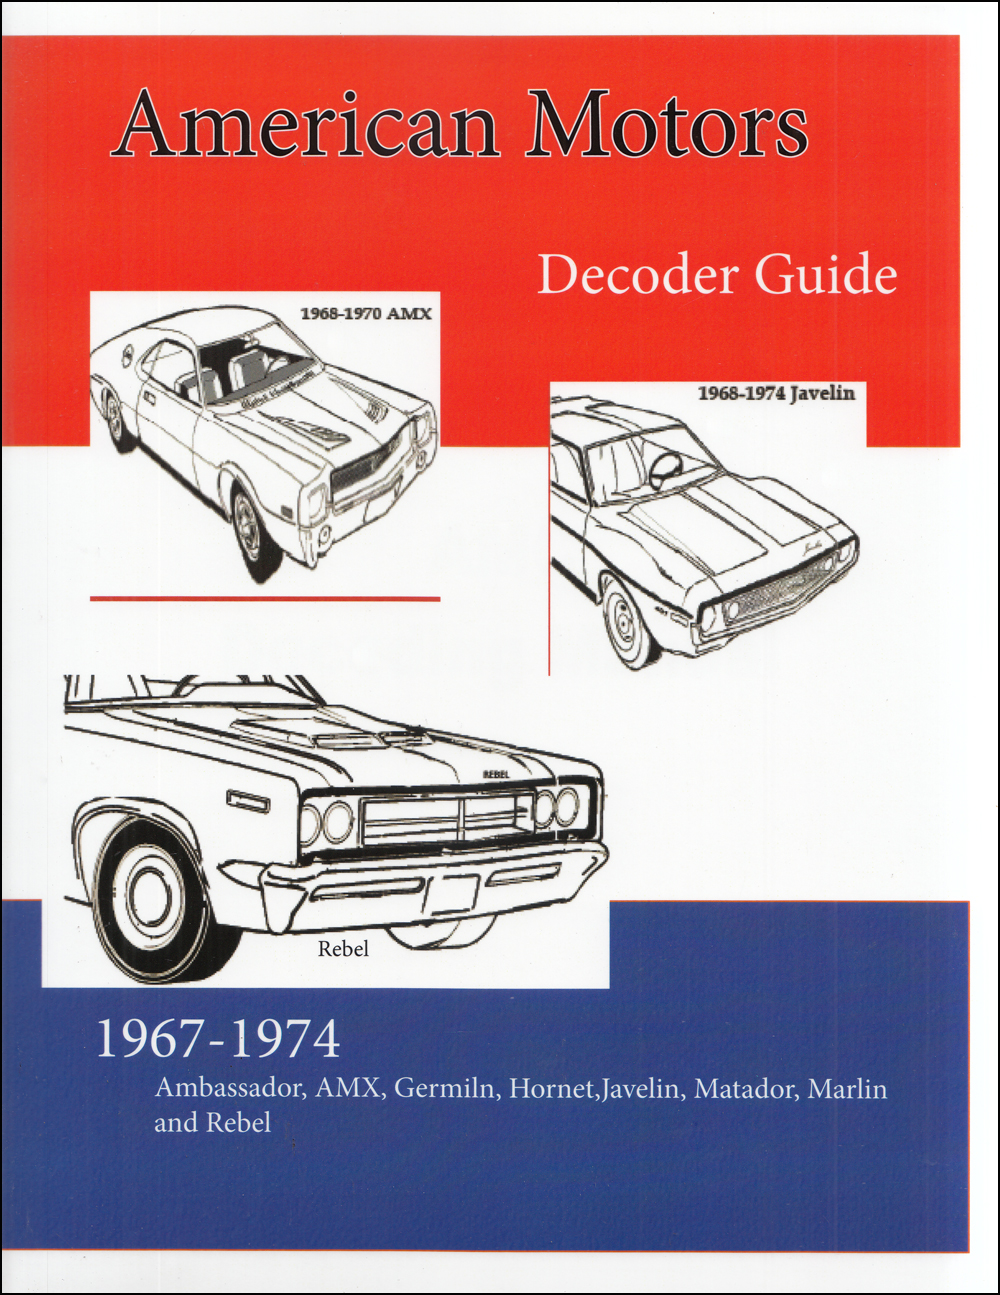 1967-1974 AMC Cars Numbers Decoder